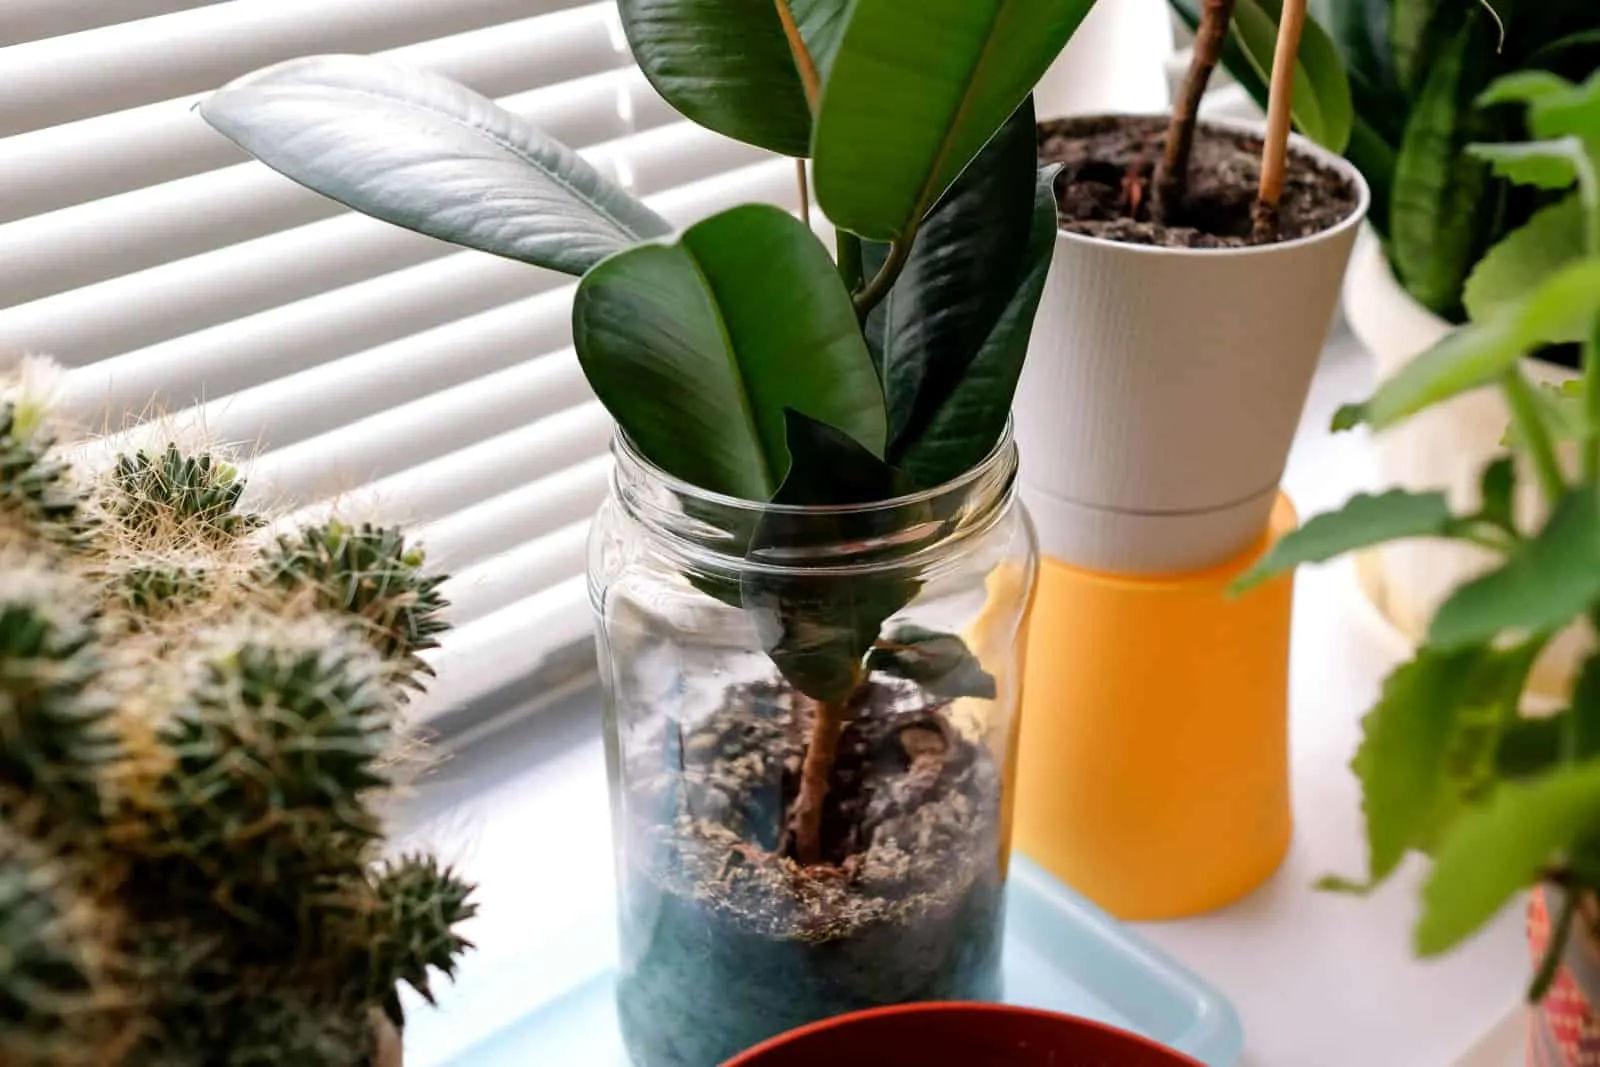 Ficus in a glass jar on the windowsill.